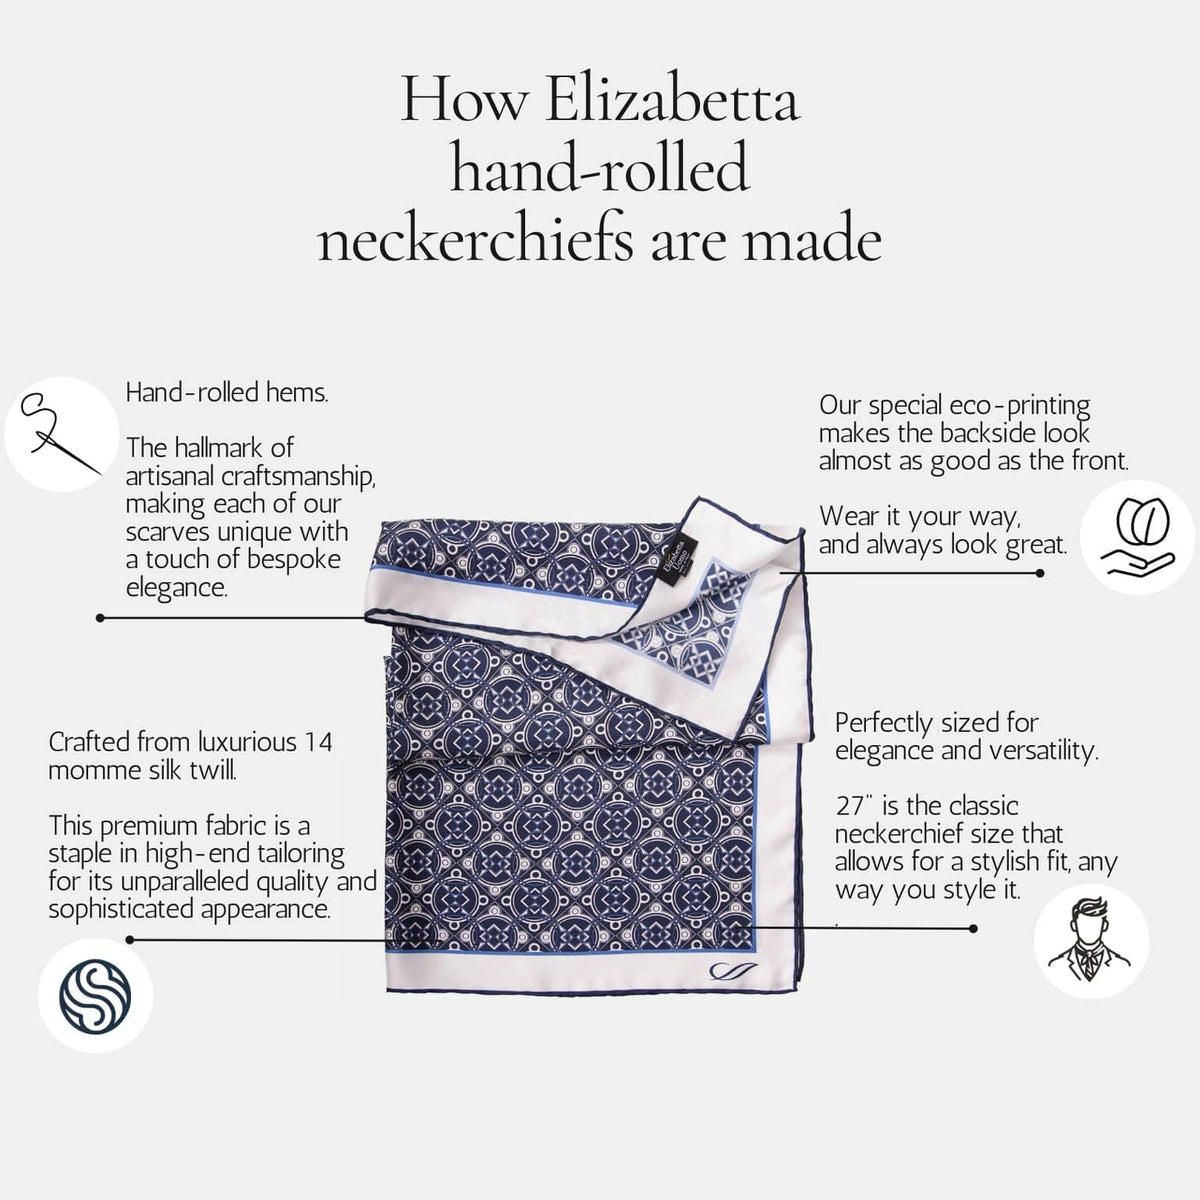 How Elizabetta handrolled neckerchiefs are made